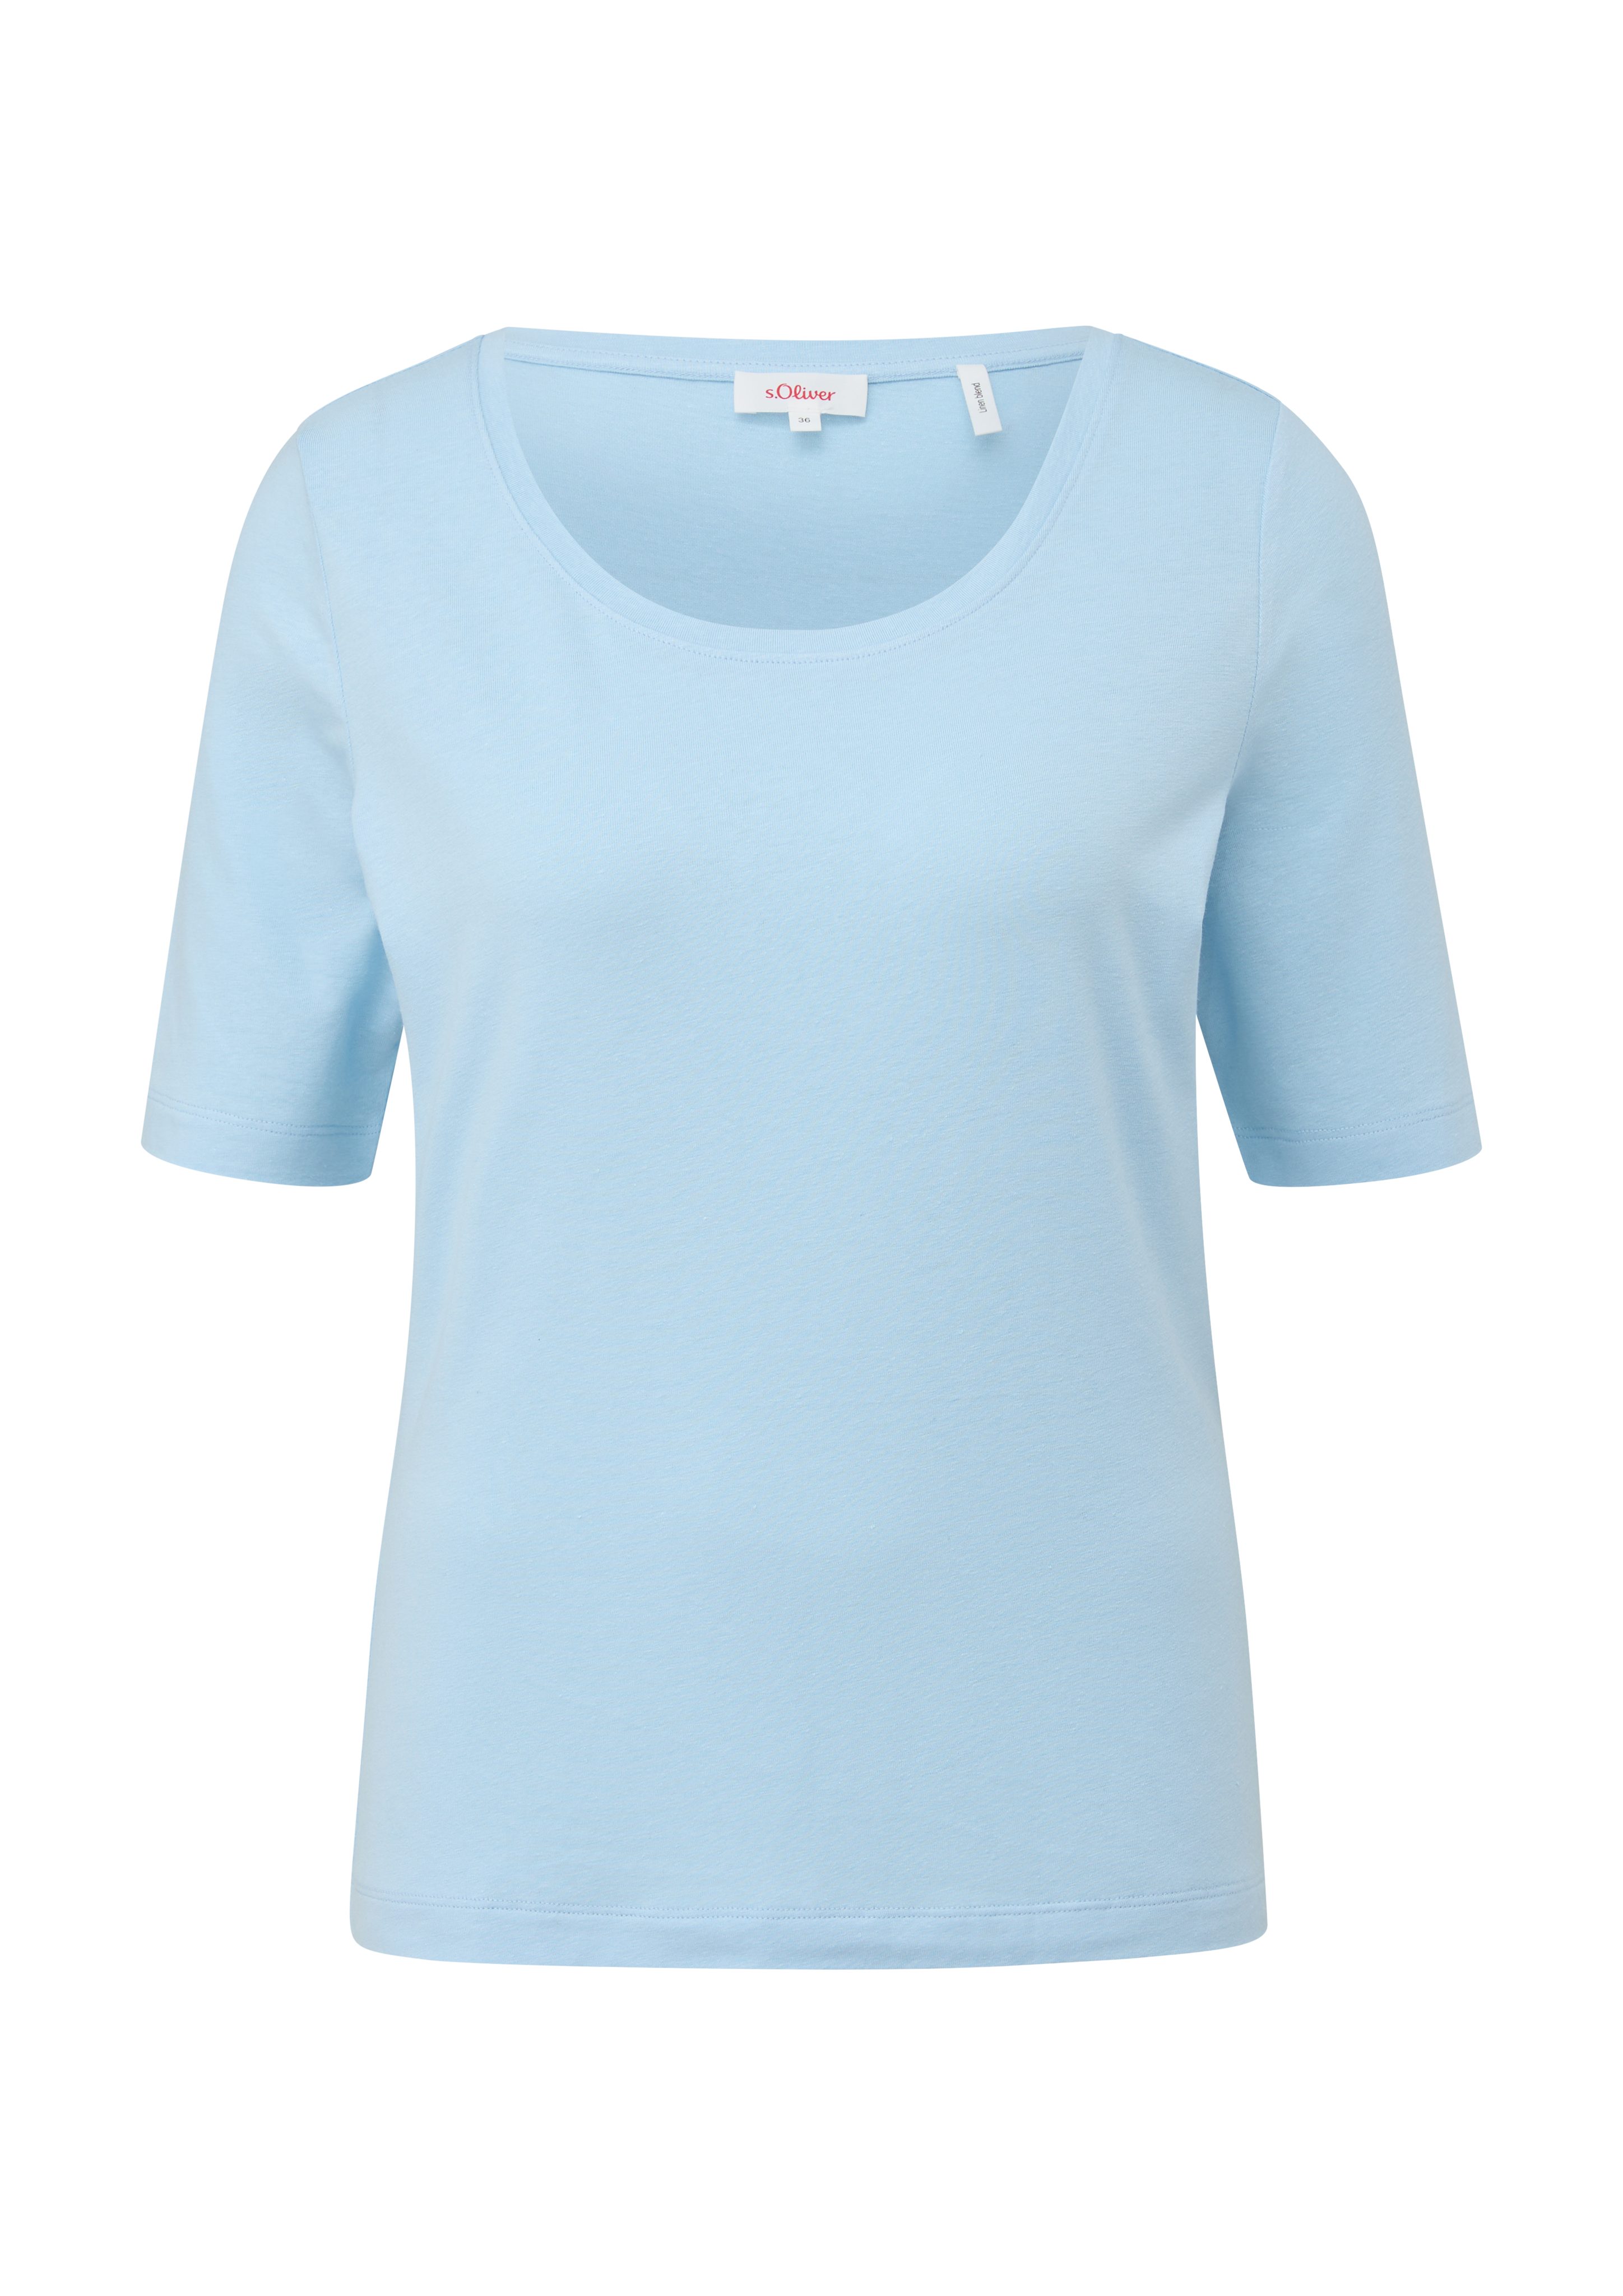 s.Oliver Kurzarmshirt hellblau mit Viskosemix Leinen aus T-Shirt